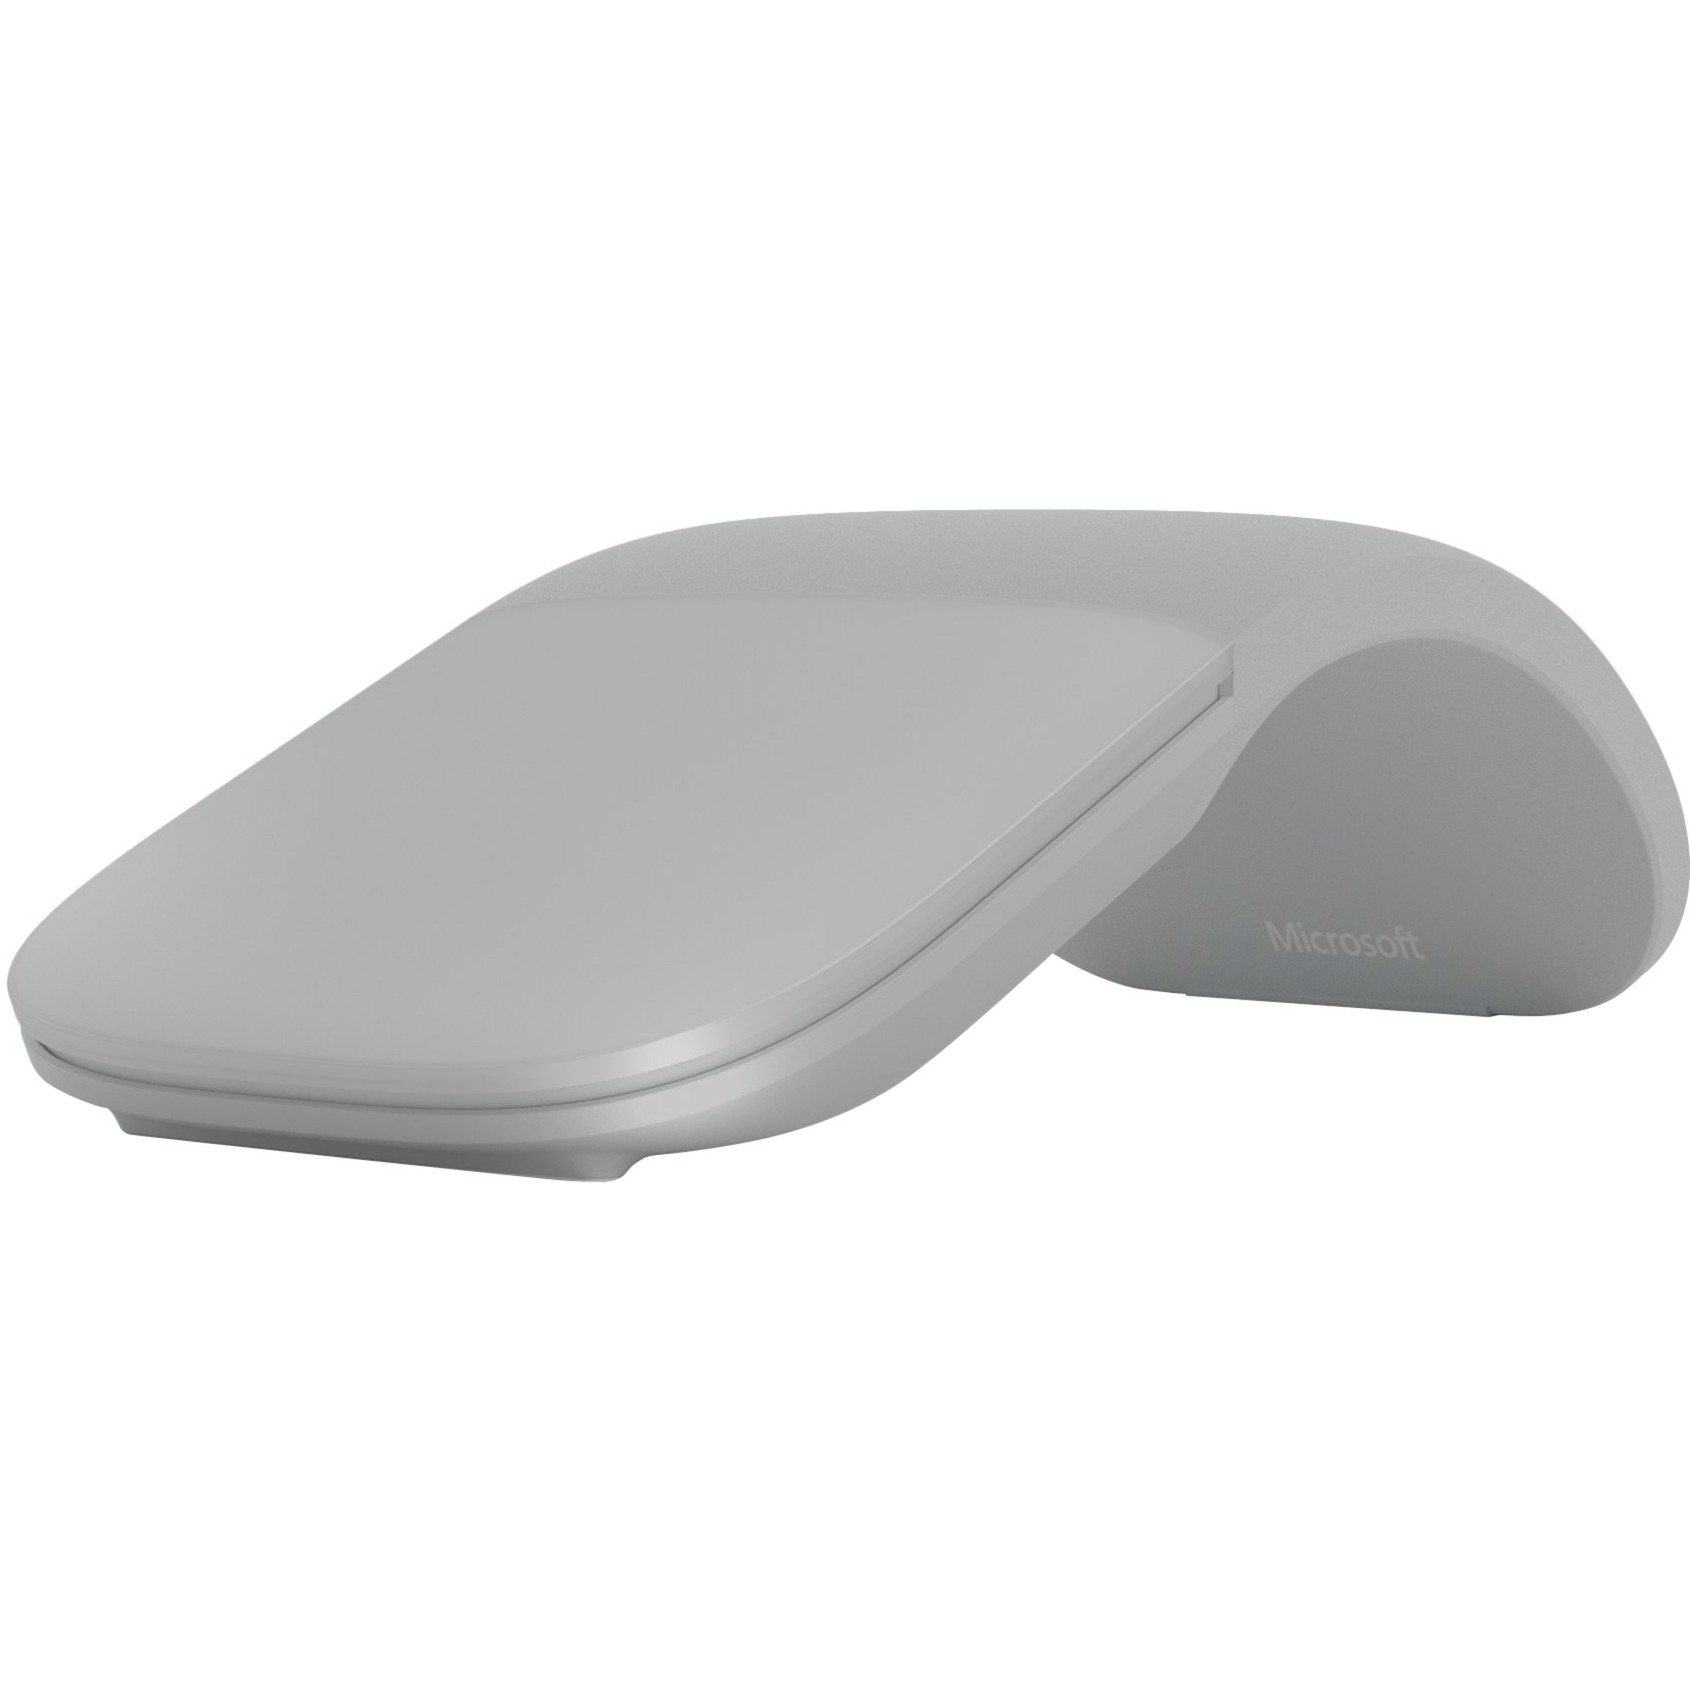 Image of Alternate - Arc Touch Bluethooth Mouse, Maus online einkaufen bei Alternate